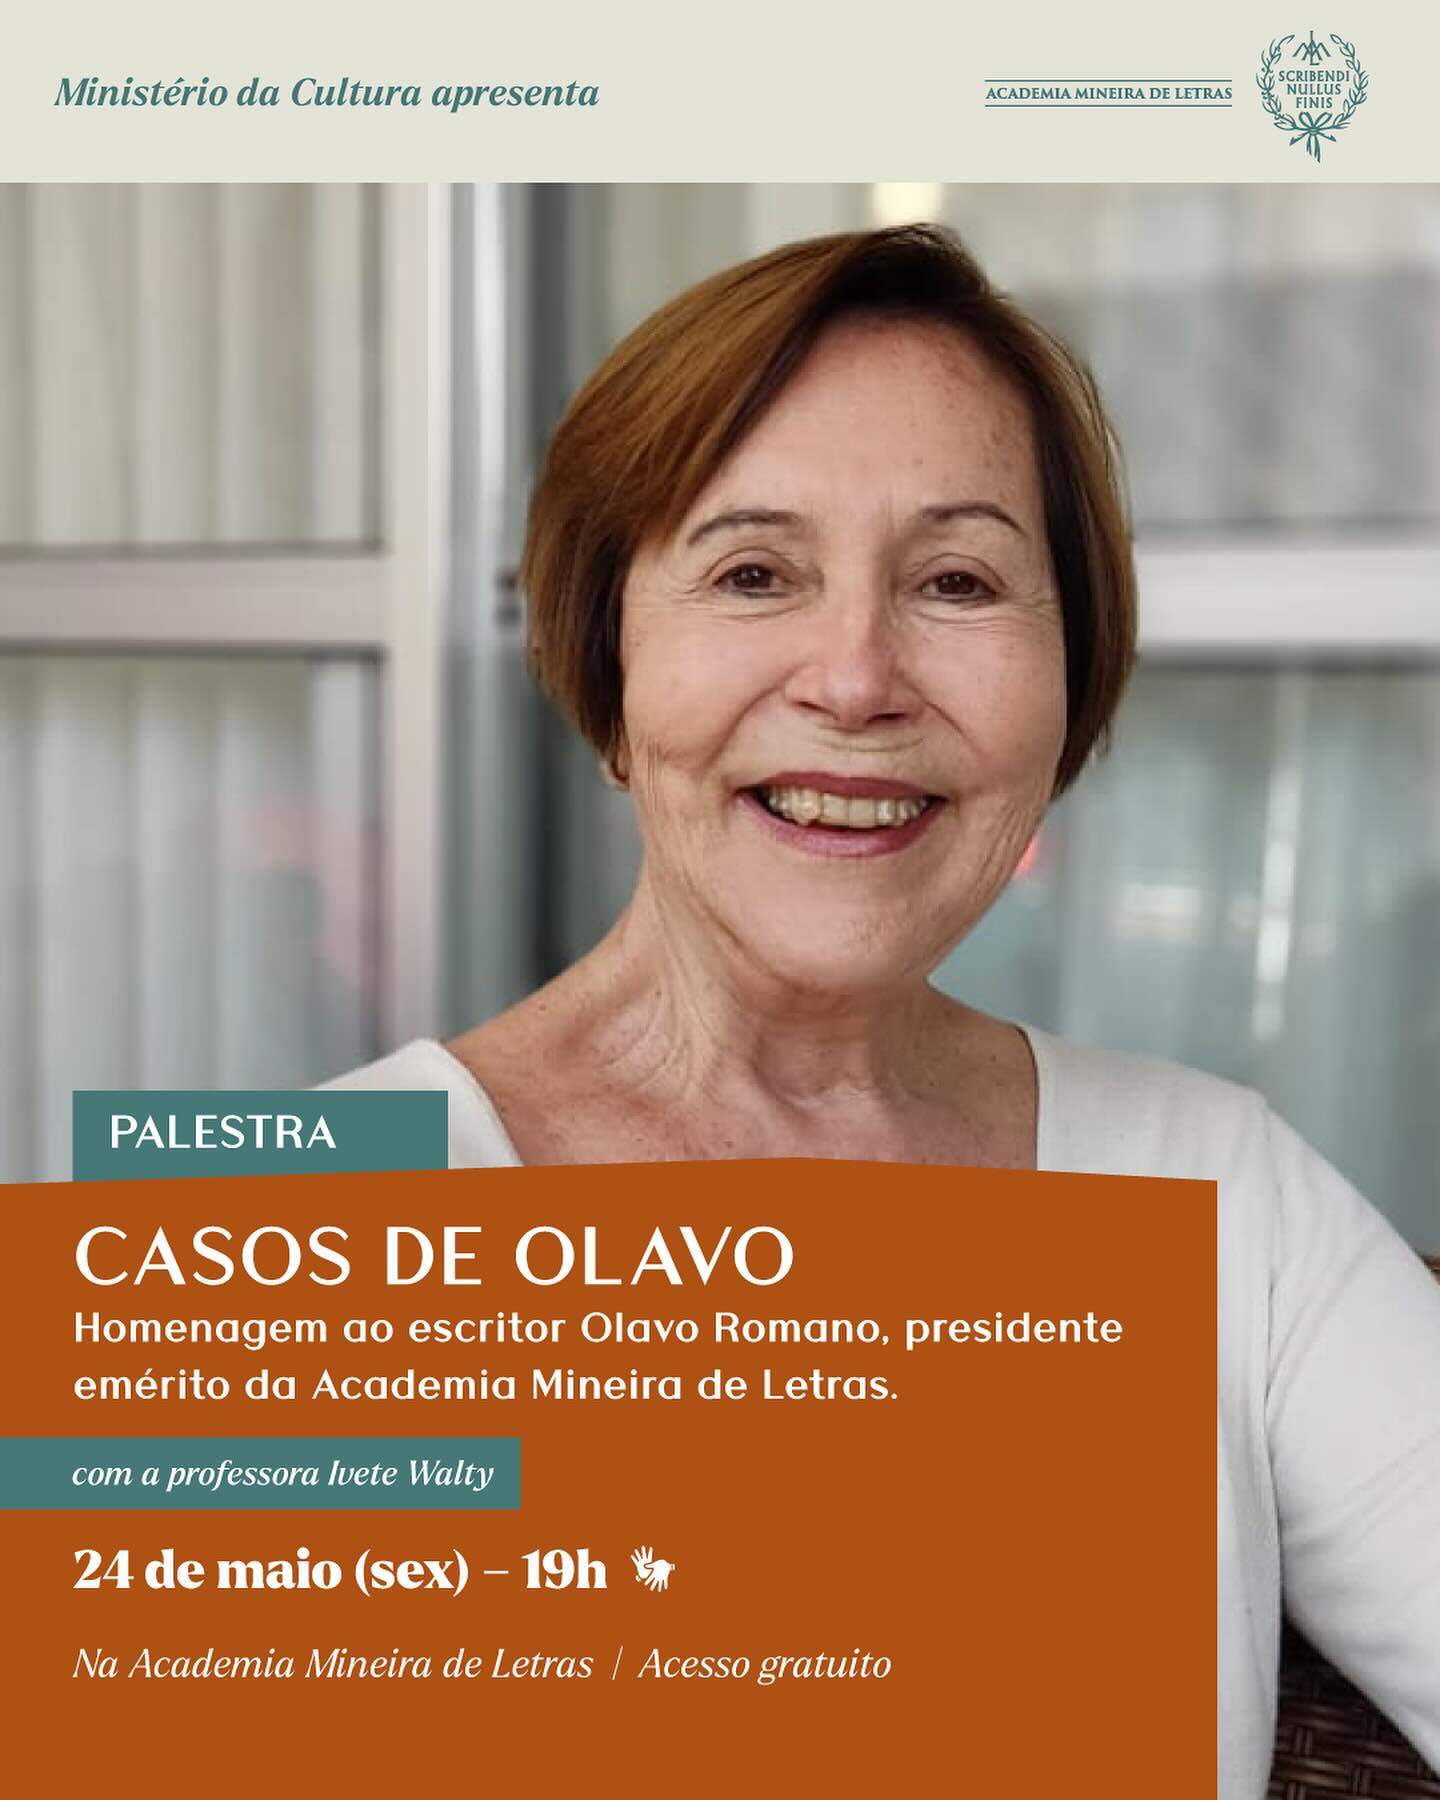 Palestra: "Casos de Olavo" com Ivete Walty